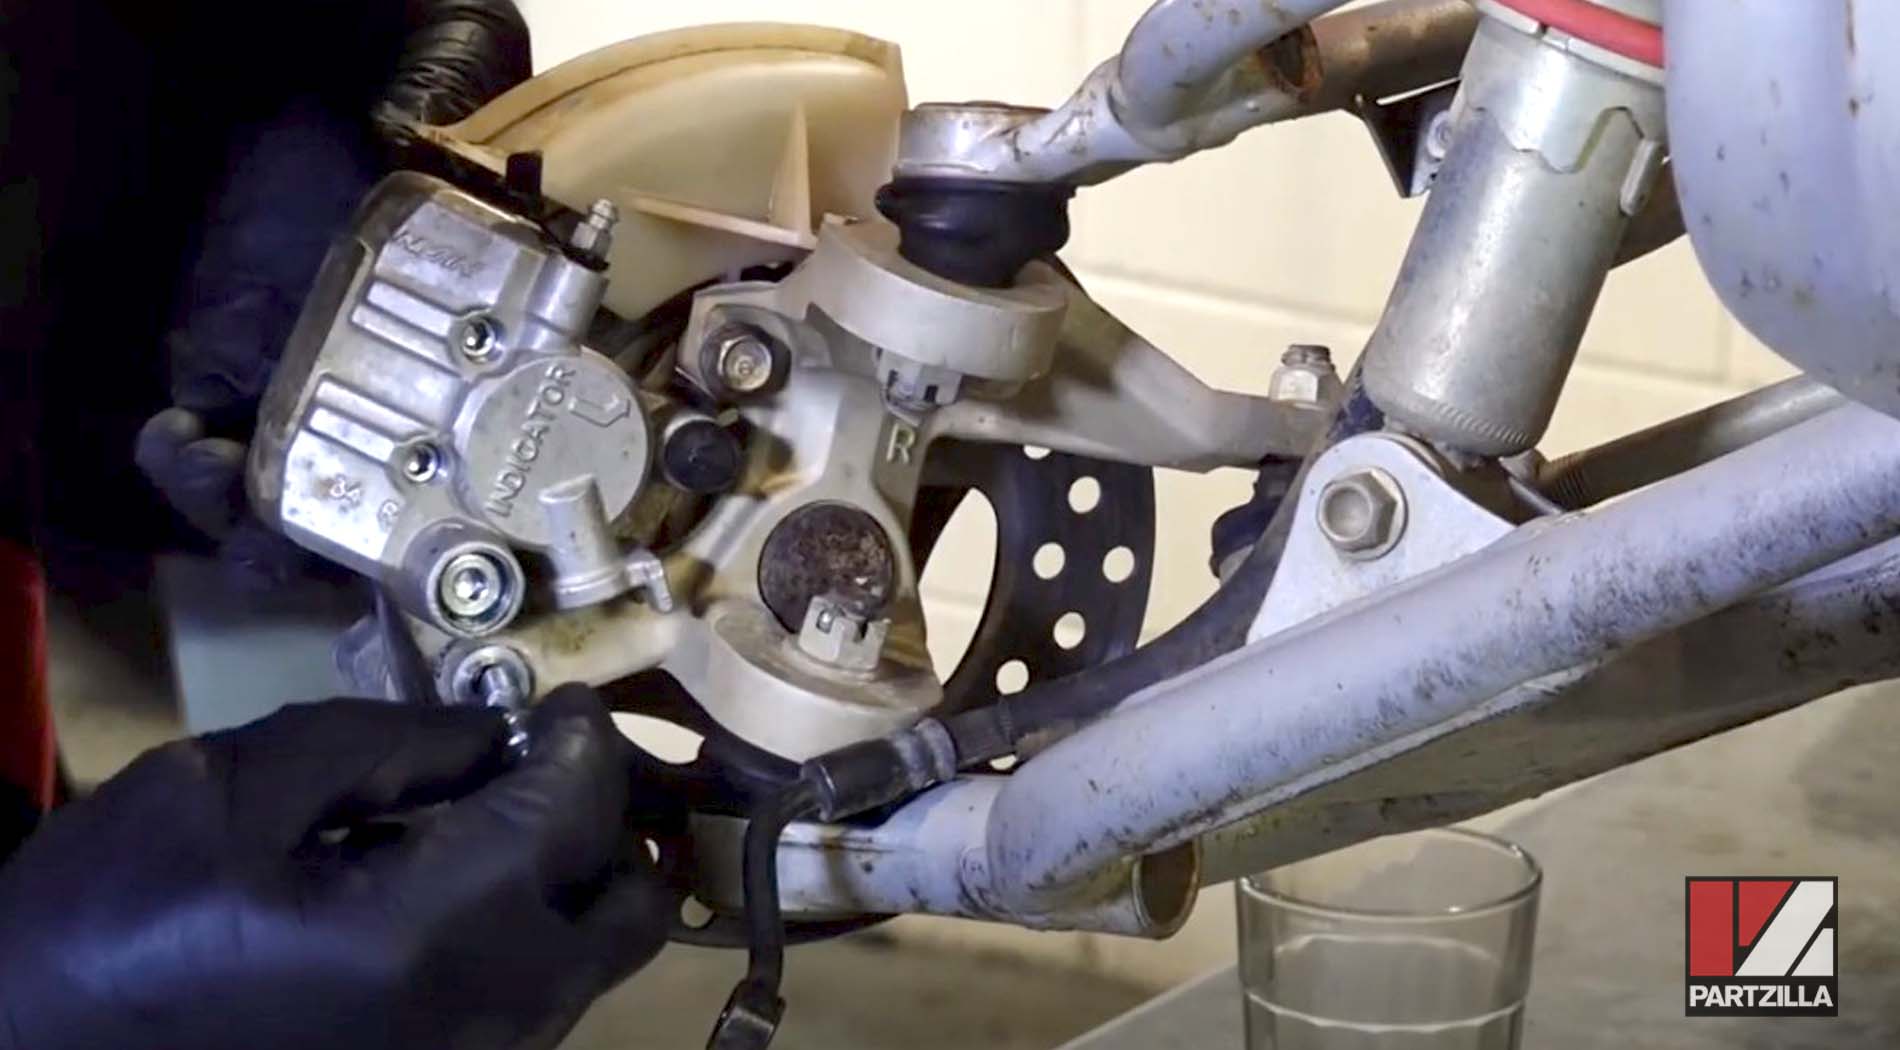 Honda TRX400 brake caliper assembly